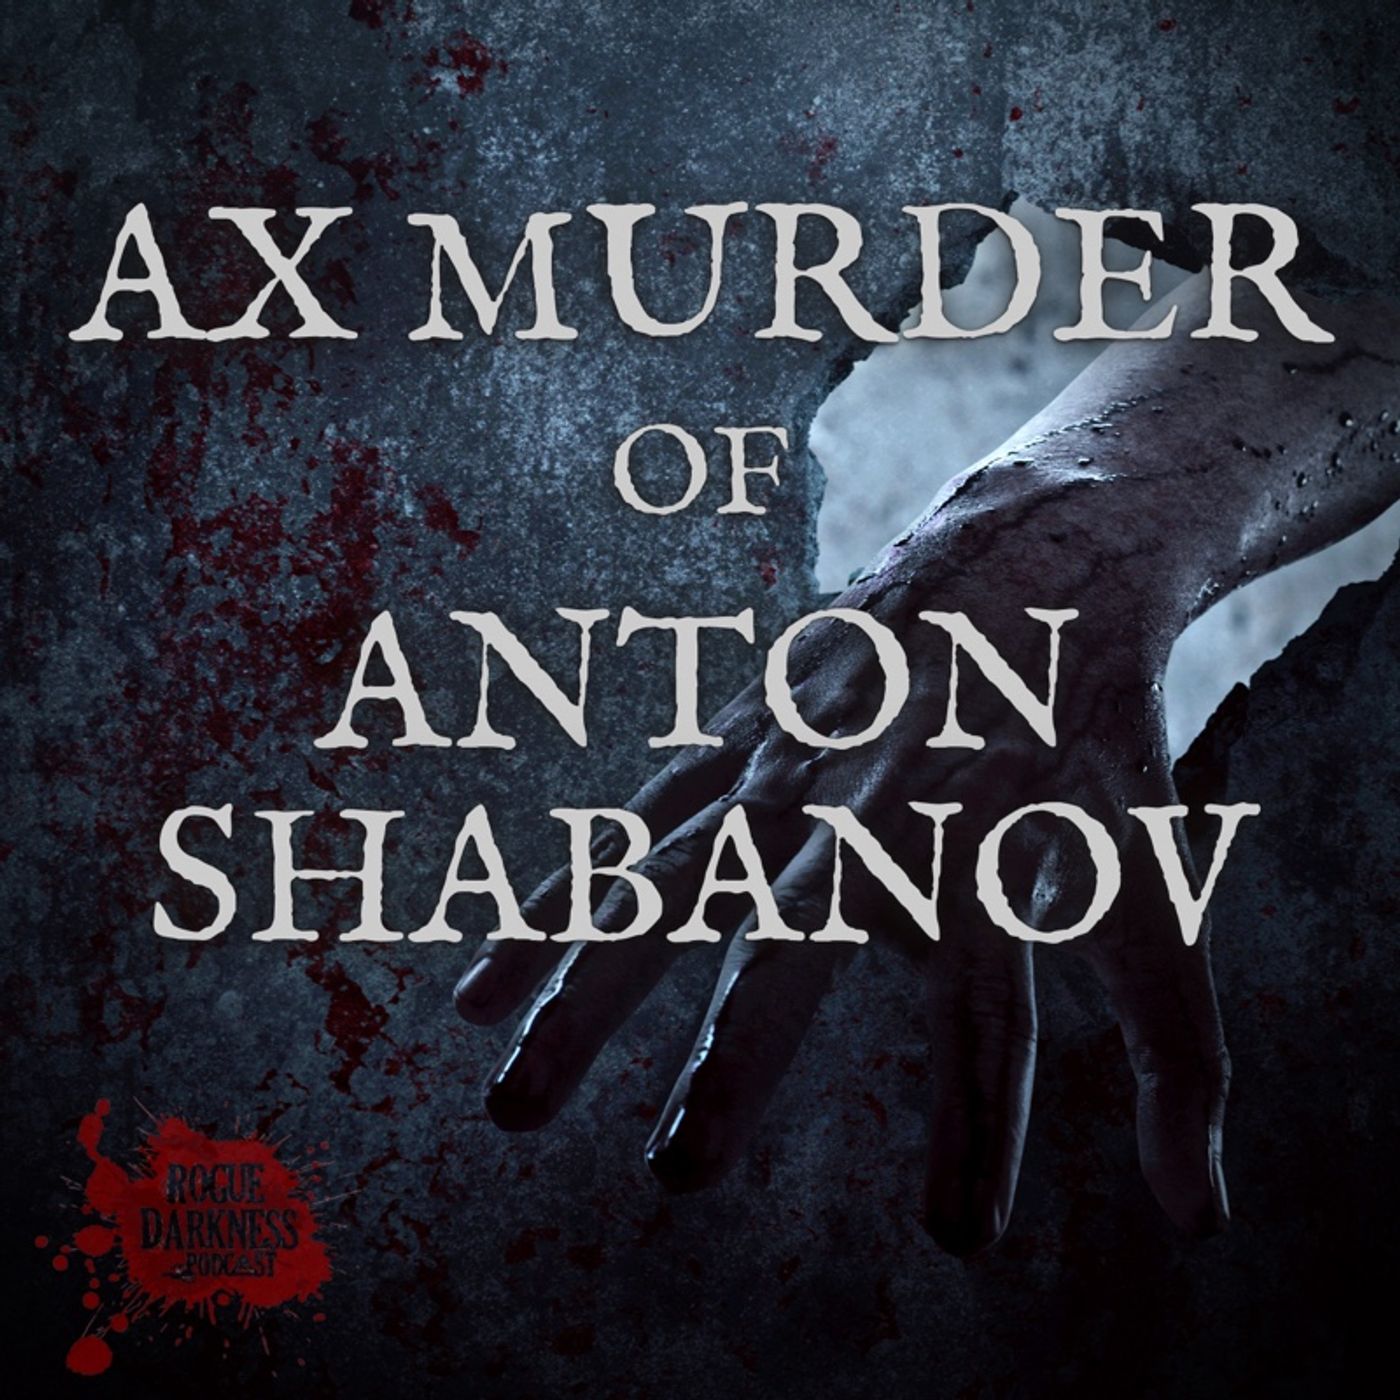 XLVI: Rituals Gone Rogue - The Brutal Axe Murder of Anton Shabanov